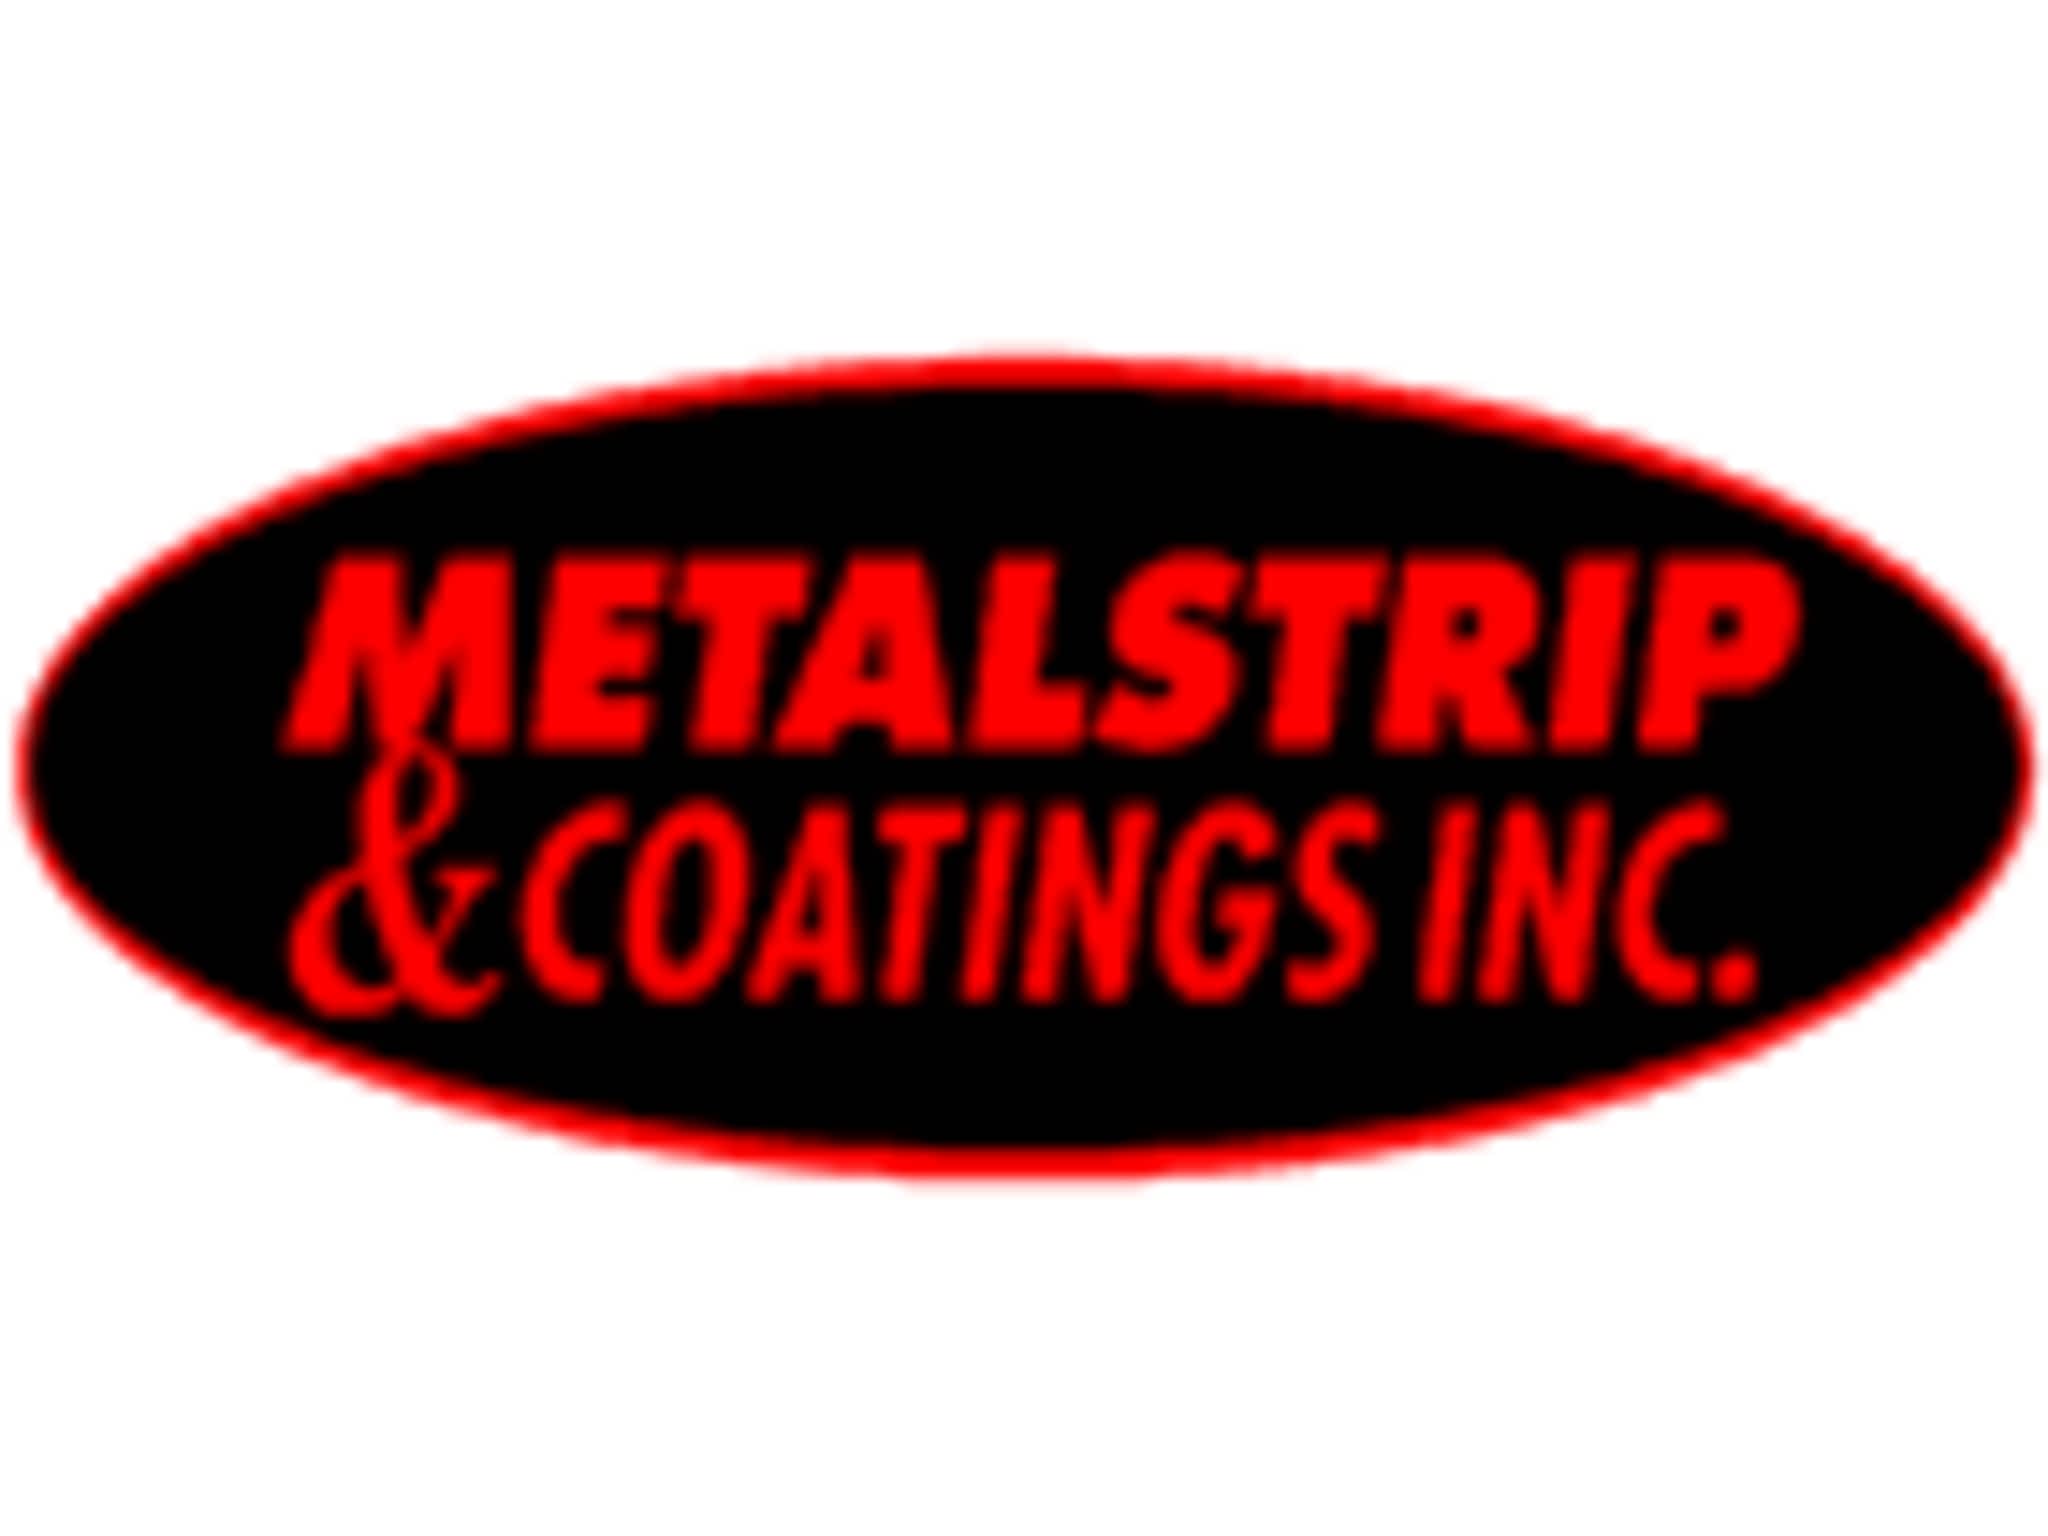 photo Metalstrip & Coatings Inc